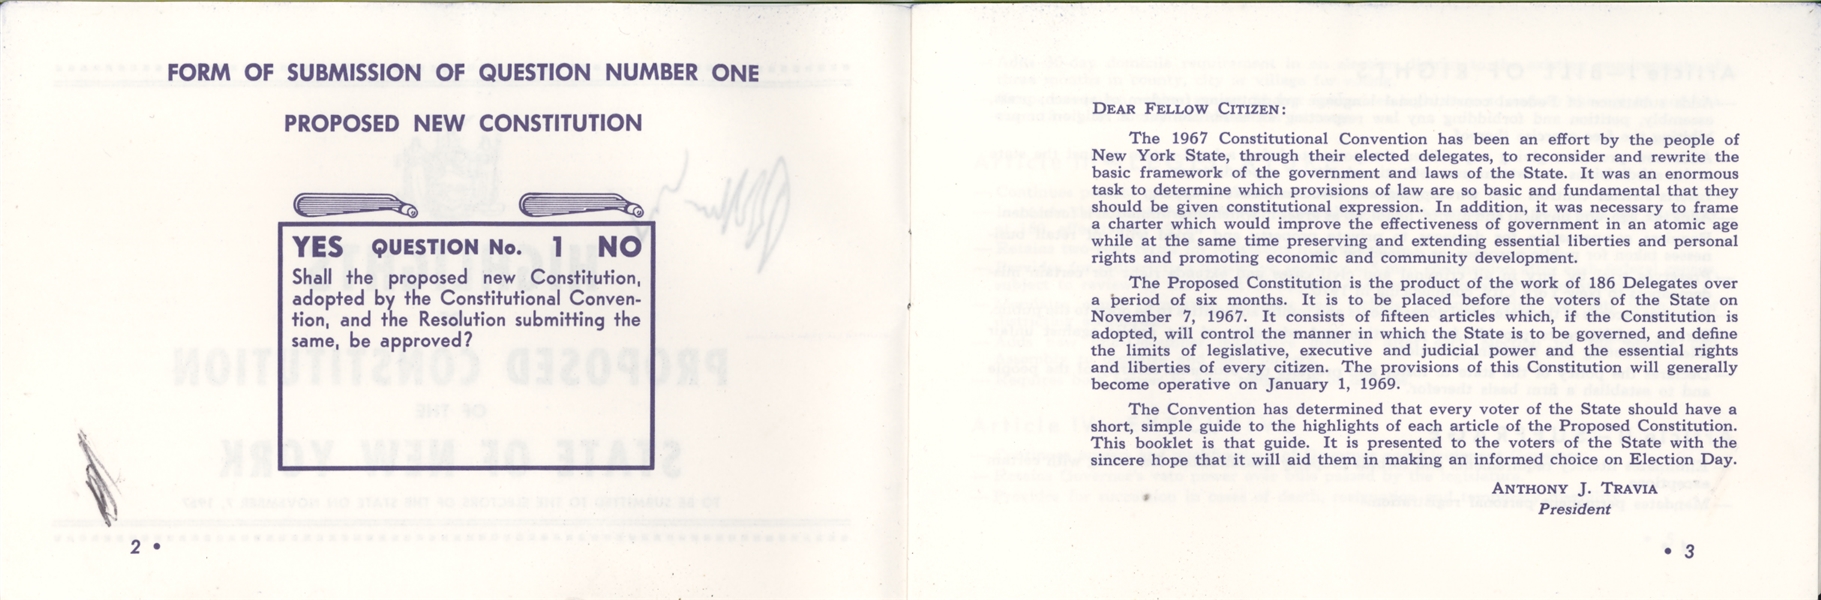 Robert Kennedy Signed Constitution Program and JFK original Senatorial Calling Card